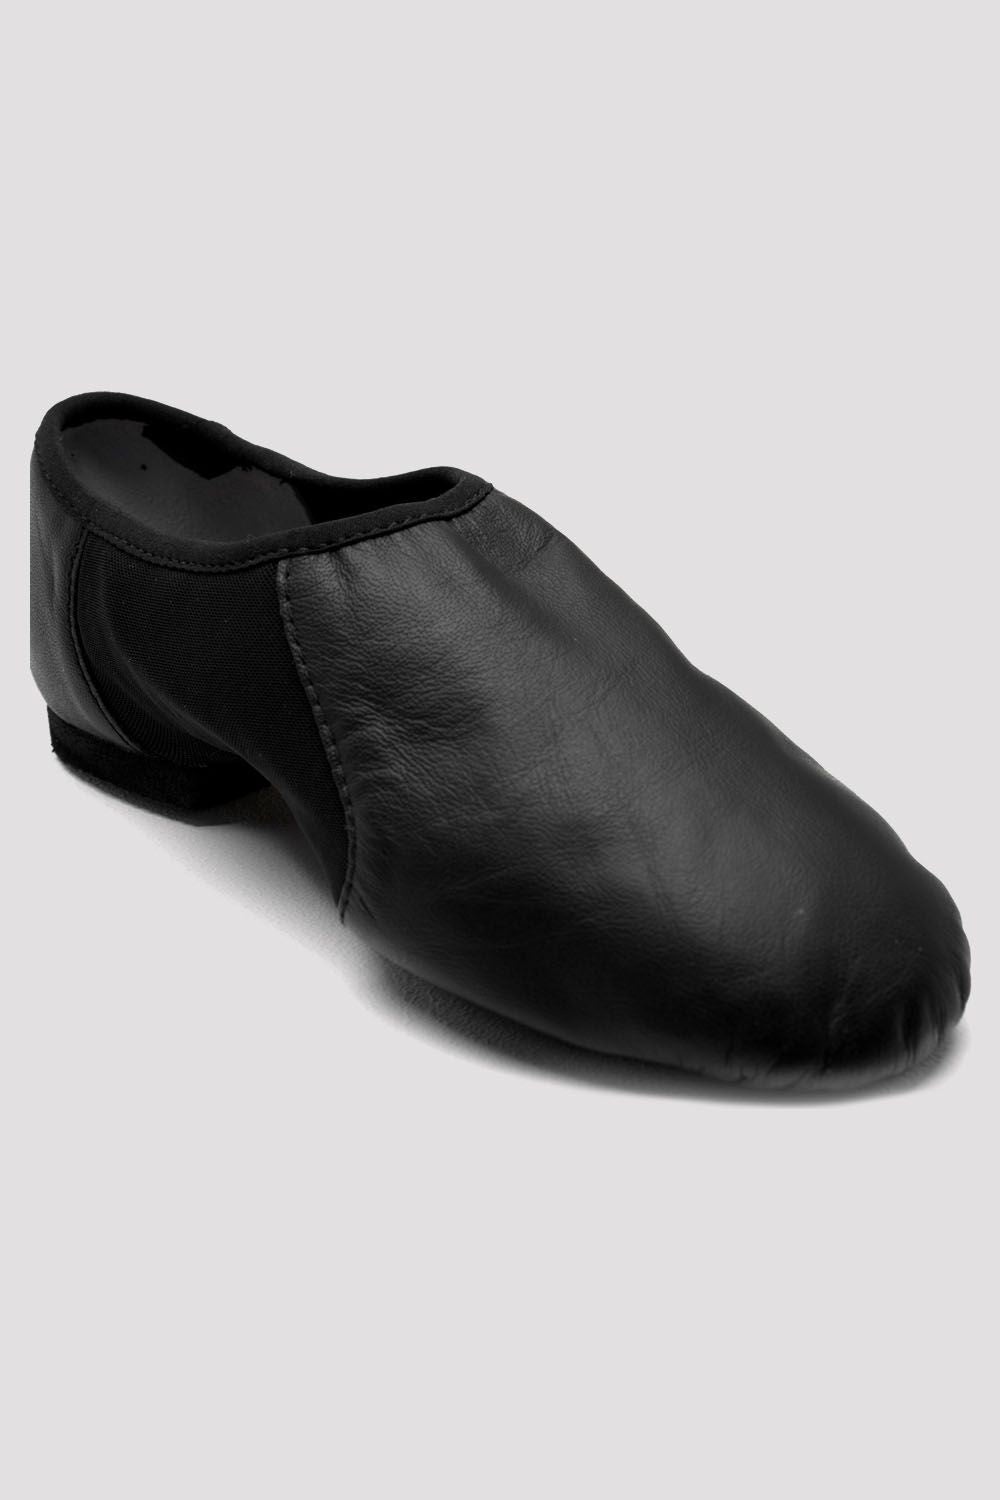 Bloch Neo-Flex Tan Jazz Shoe Adult S0495L – Dance Essentials Inc.